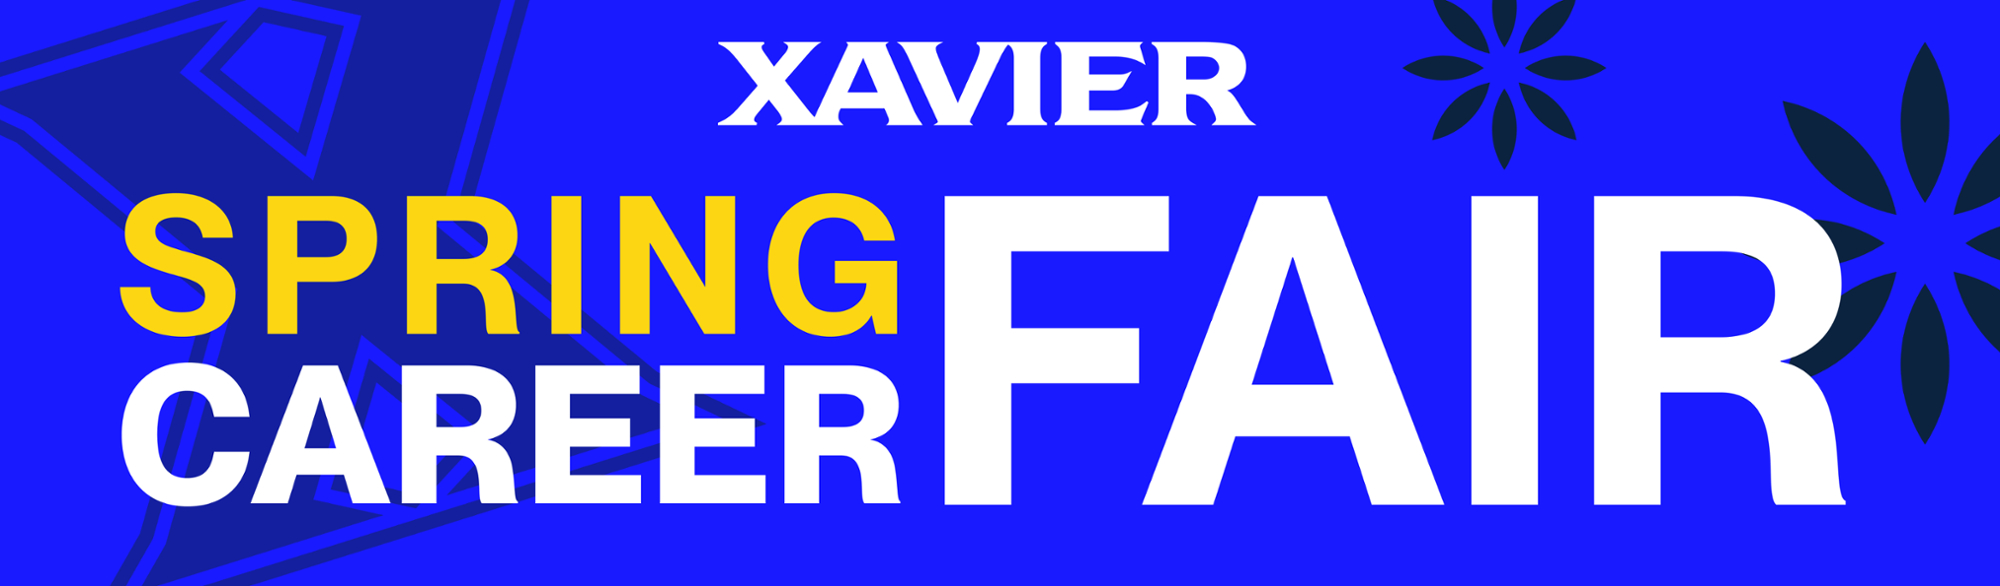 Xavier Spring Career Fair.jpg